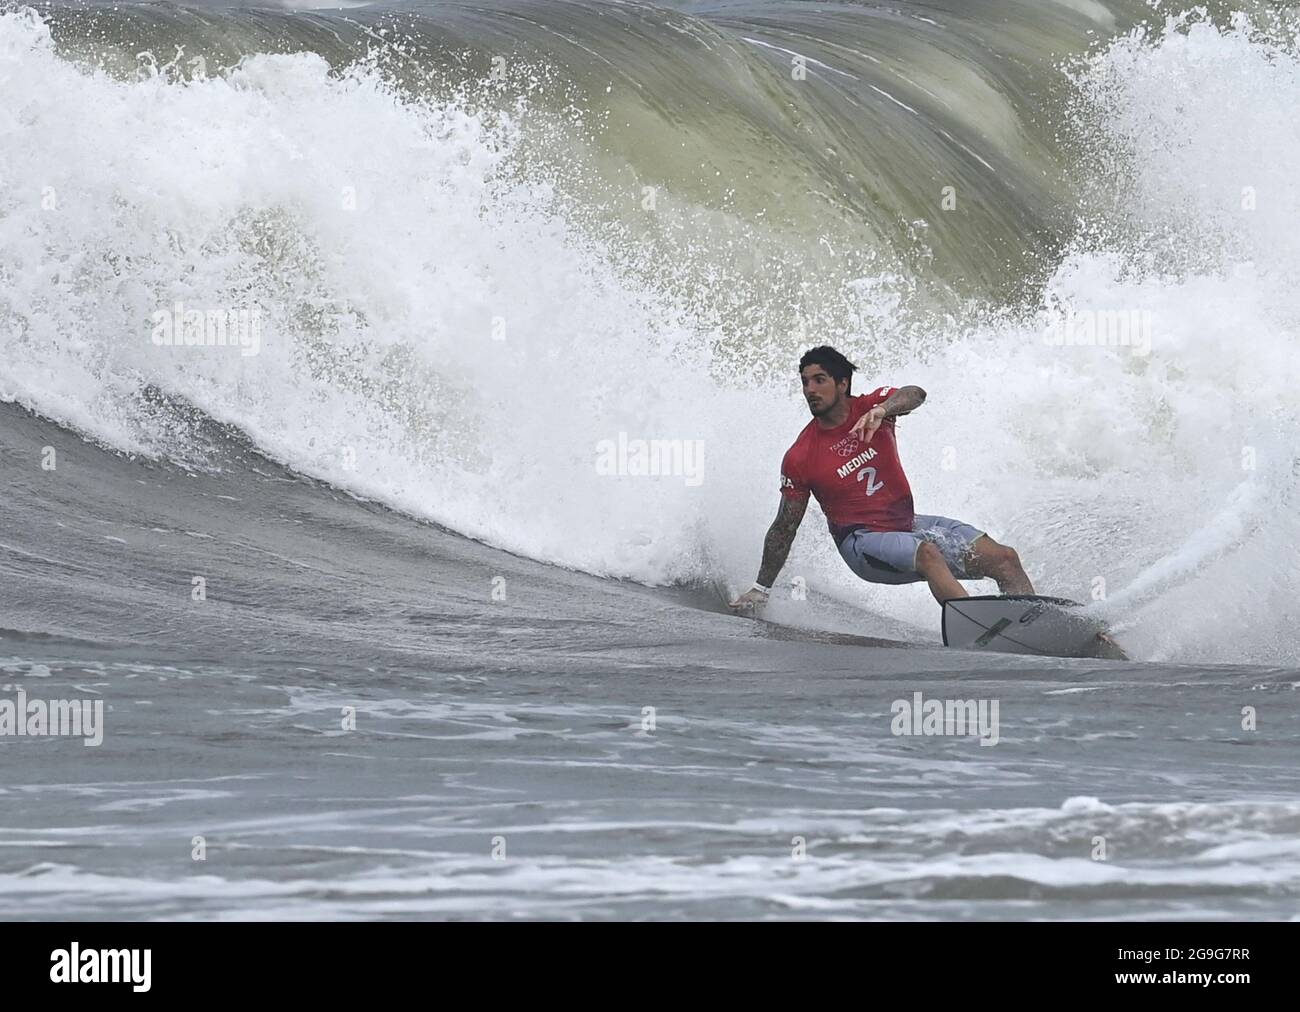 (210726) -- CHIBA, July 26, 2021 (Xinhua) -- Gabriel Medina of Brazil competes during the men's 3rd round surfing match at Tsurigasaki Surfing Beach in Chiba Prefecture, Japan, July 26, 2021. (Xinhua/Du Yu) Stock Photo